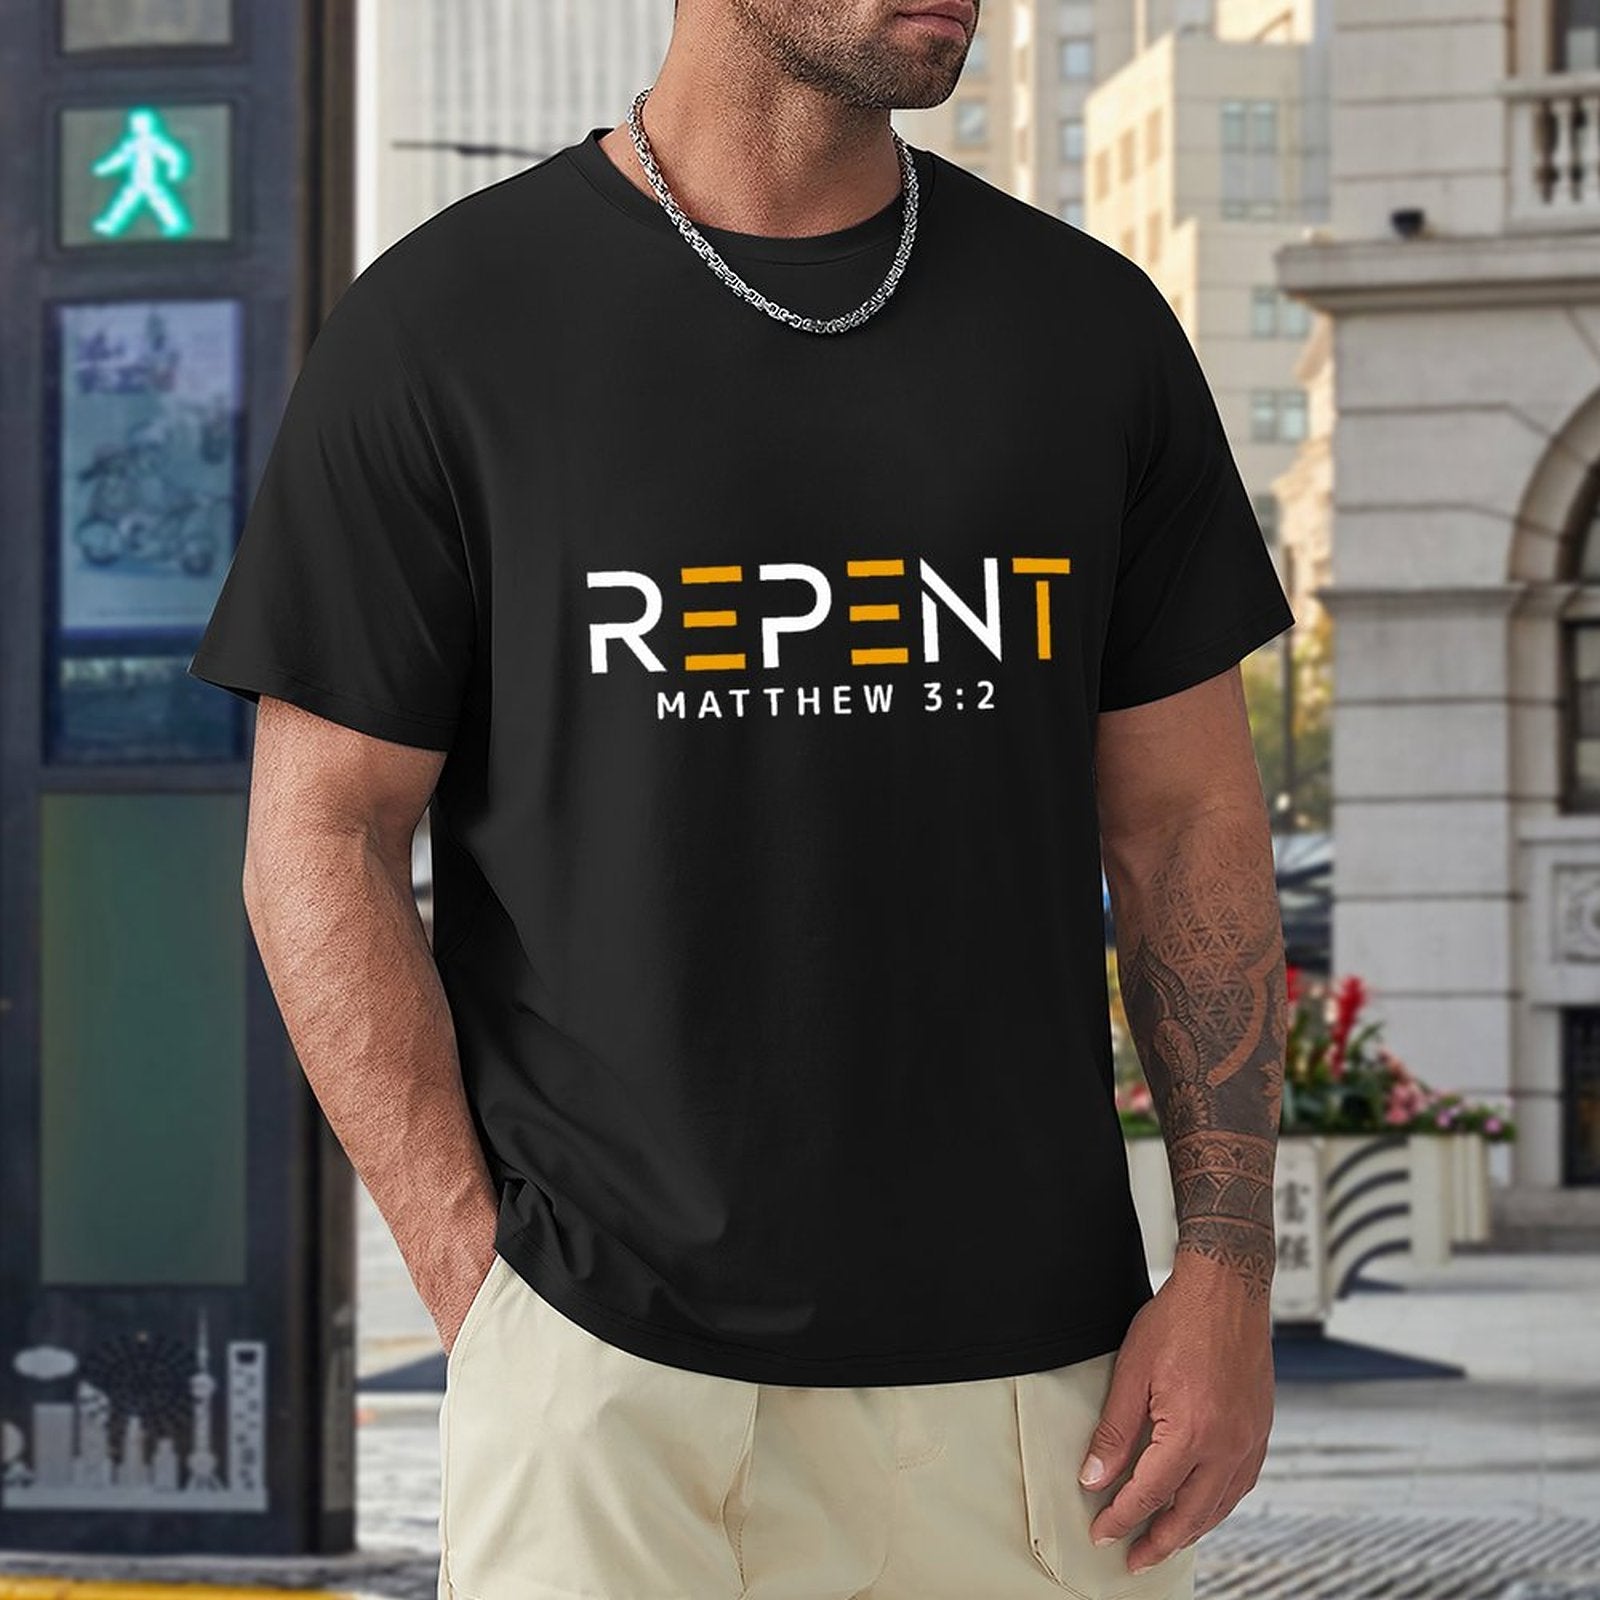 Repent I Am Unshaken Men's Christian T-shirt SALE-Personal Design